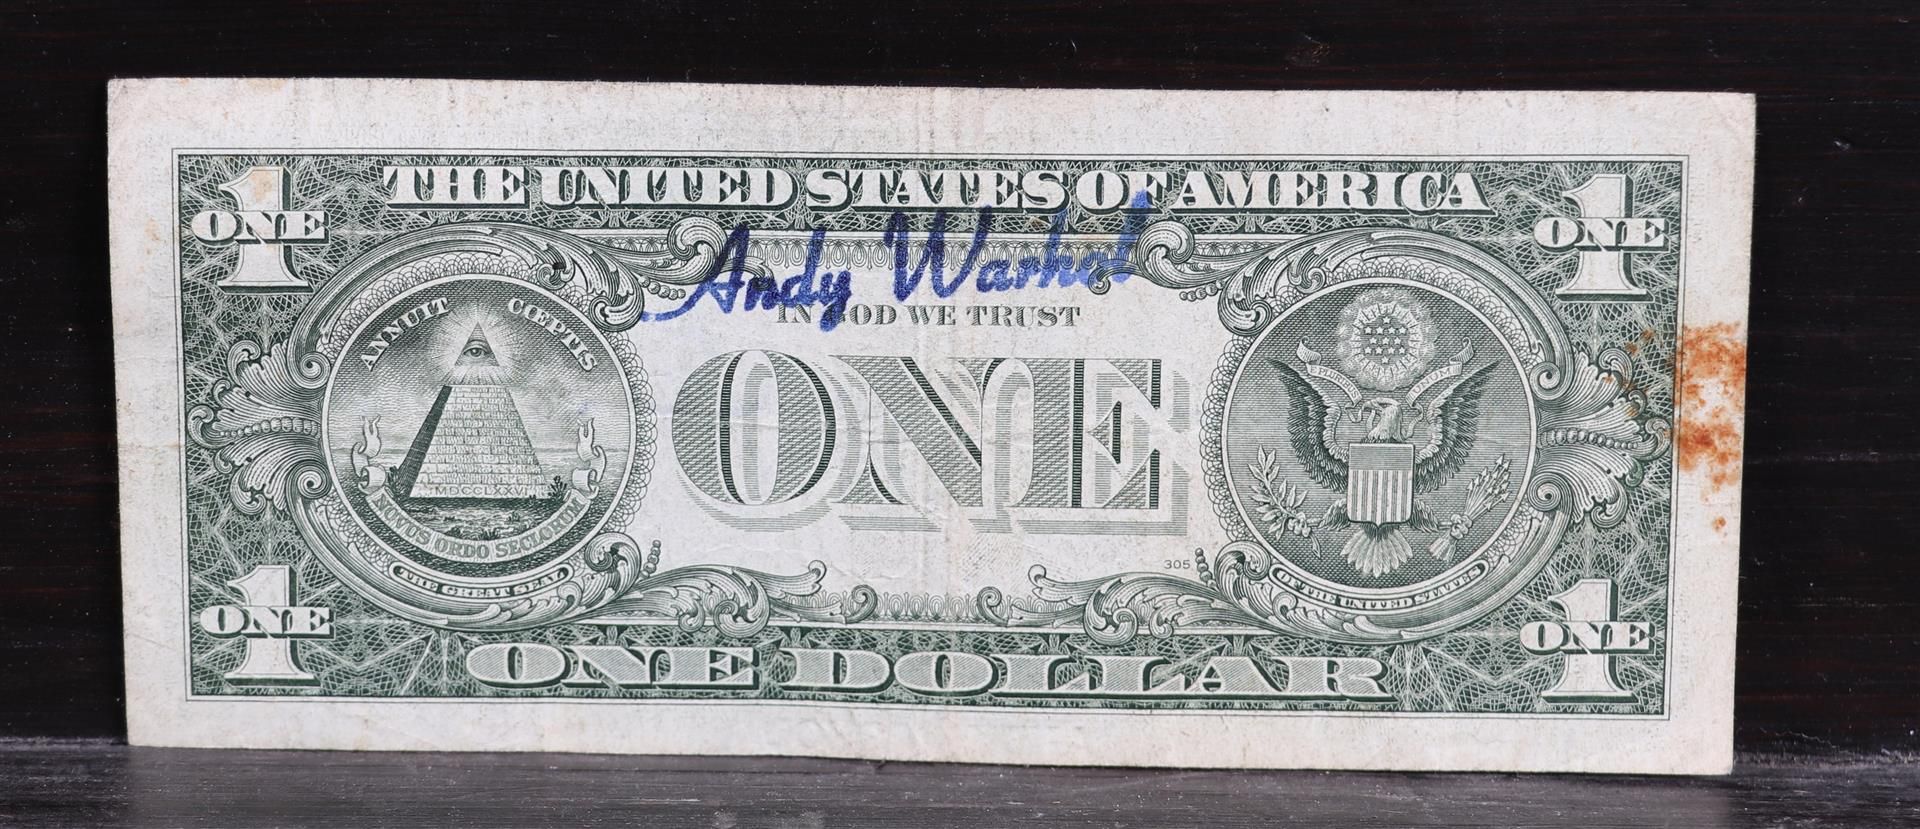 Andy Warhol (Pittsburgh, Pennsylvania, 1928 - 1987New York Presbyterian), (after), Dollar Bill, - Image 2 of 2